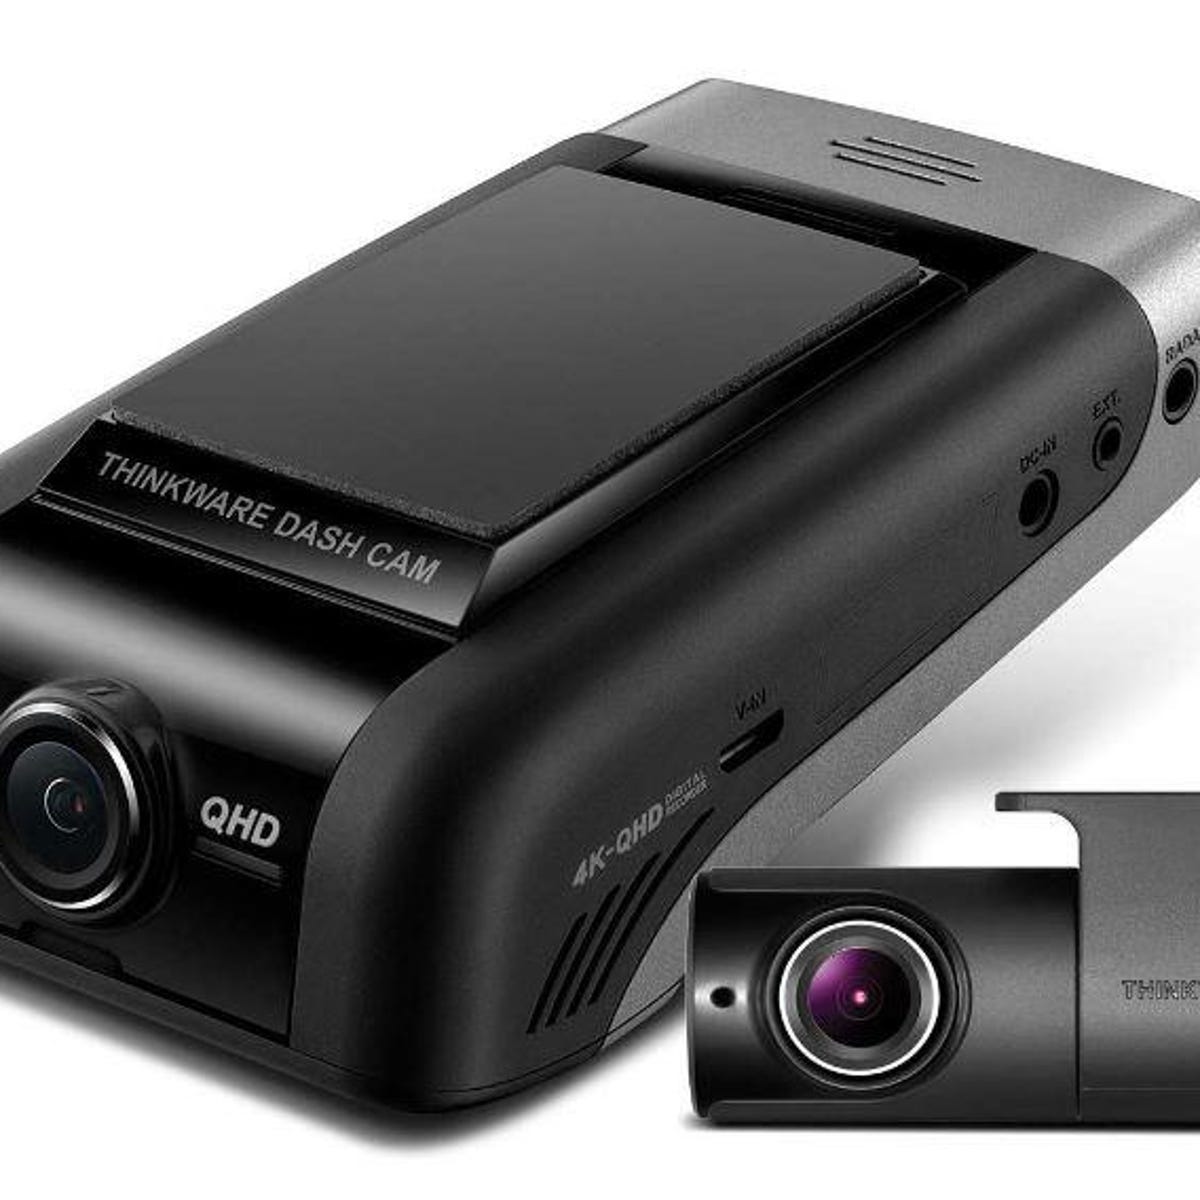 Thinkware U1000 Dashcam Hands On Superb 4k Resolution And Good Night Vision Zdnet